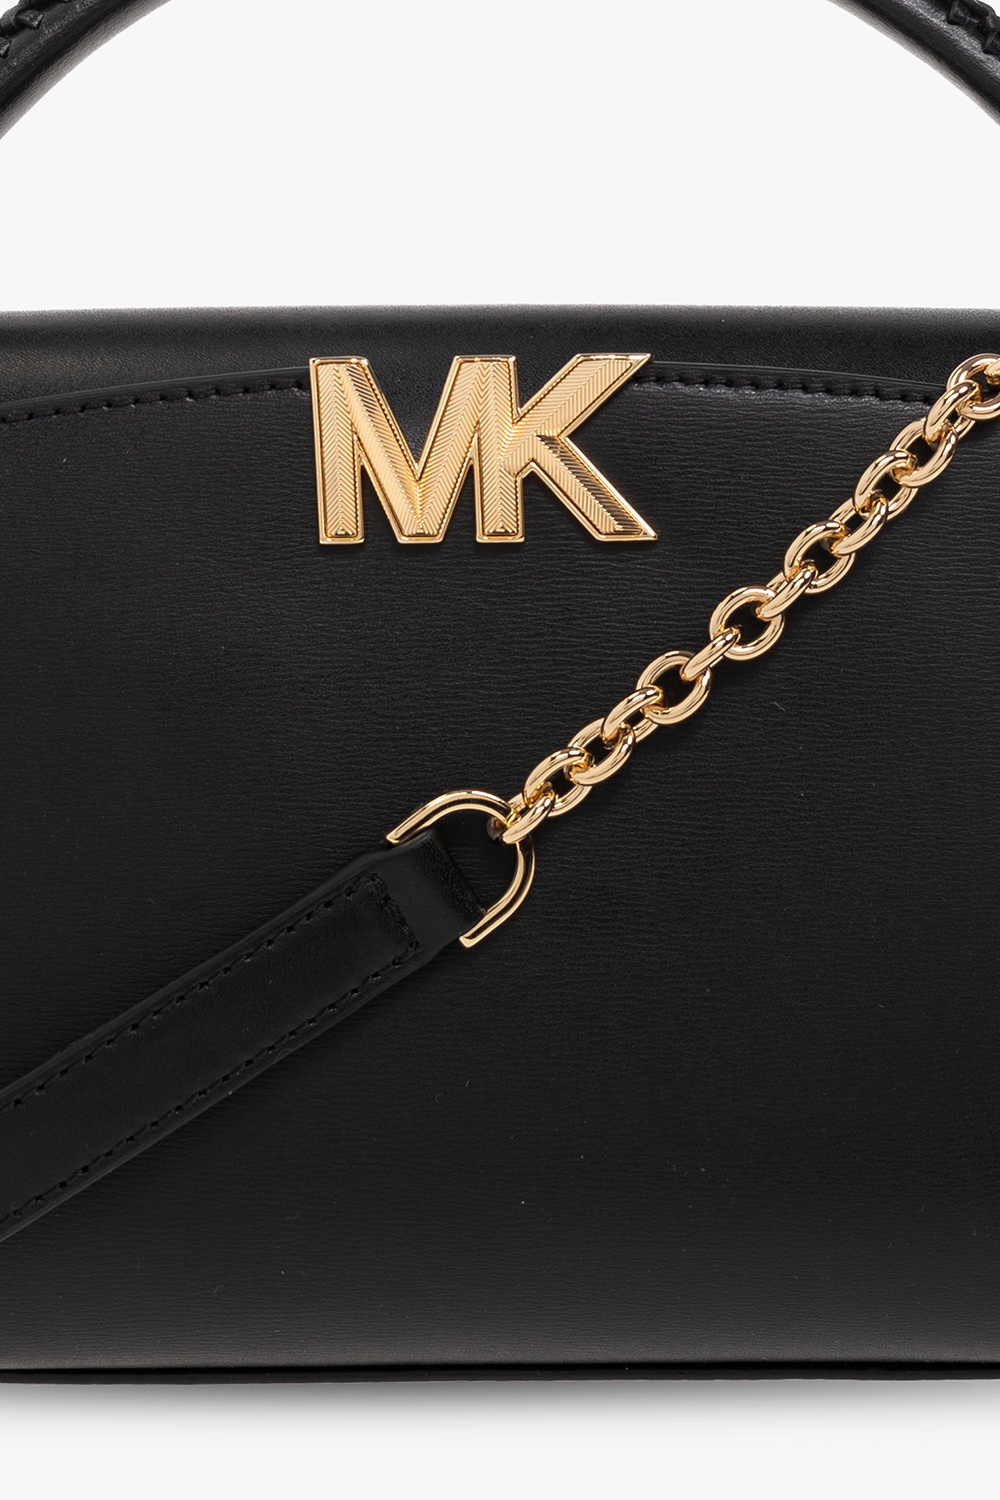  Michael Michael Kors Karlie Large Tote Bag Black : Clothing,  Shoes & Jewelry